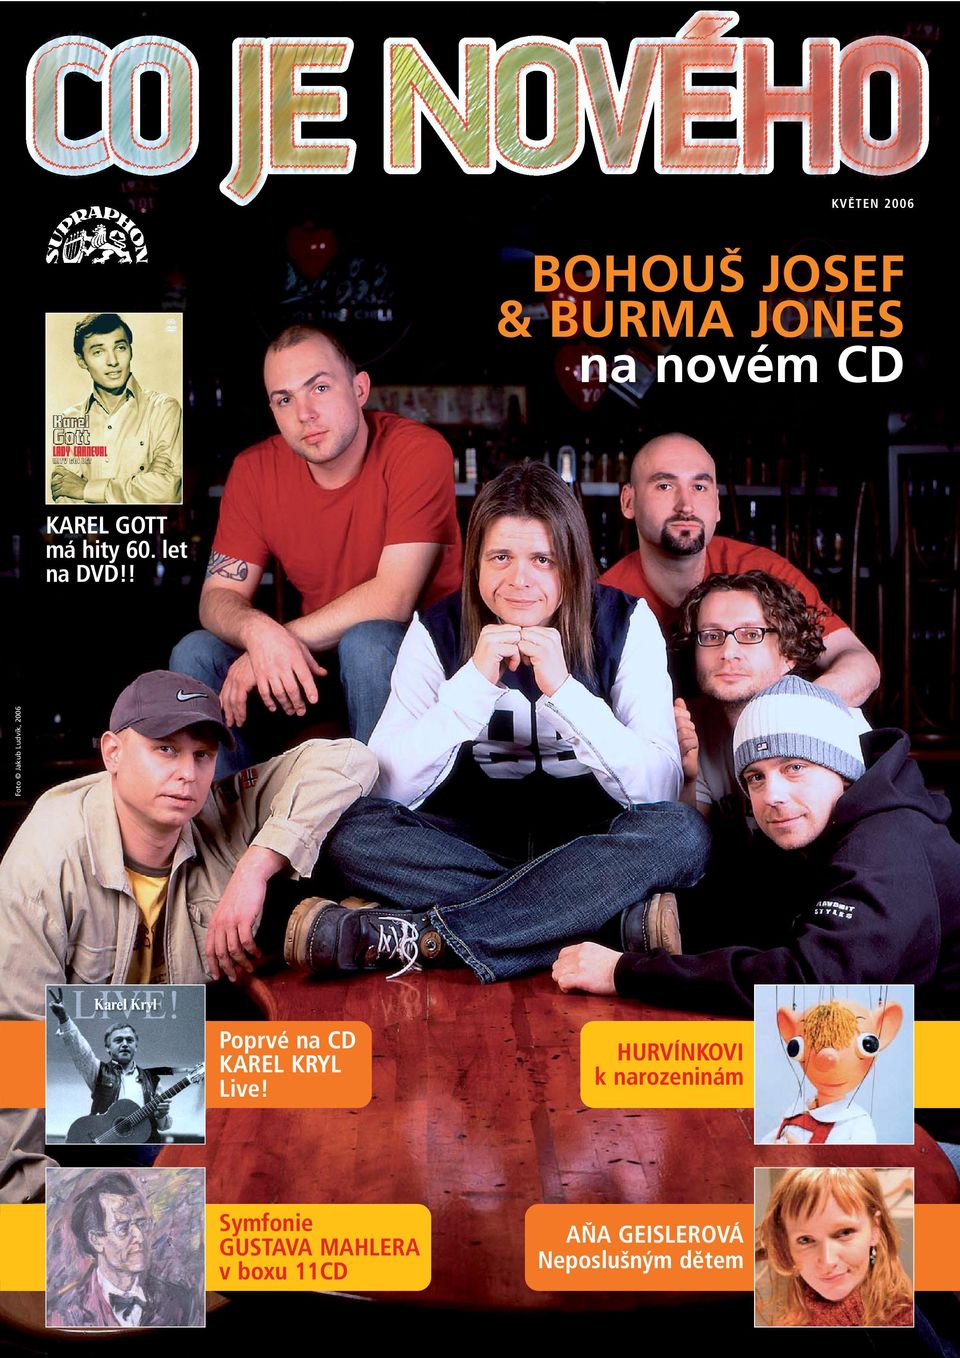 BOHOUŠ JOSEF & BURMA JONES na novém CD - PDF Free Download